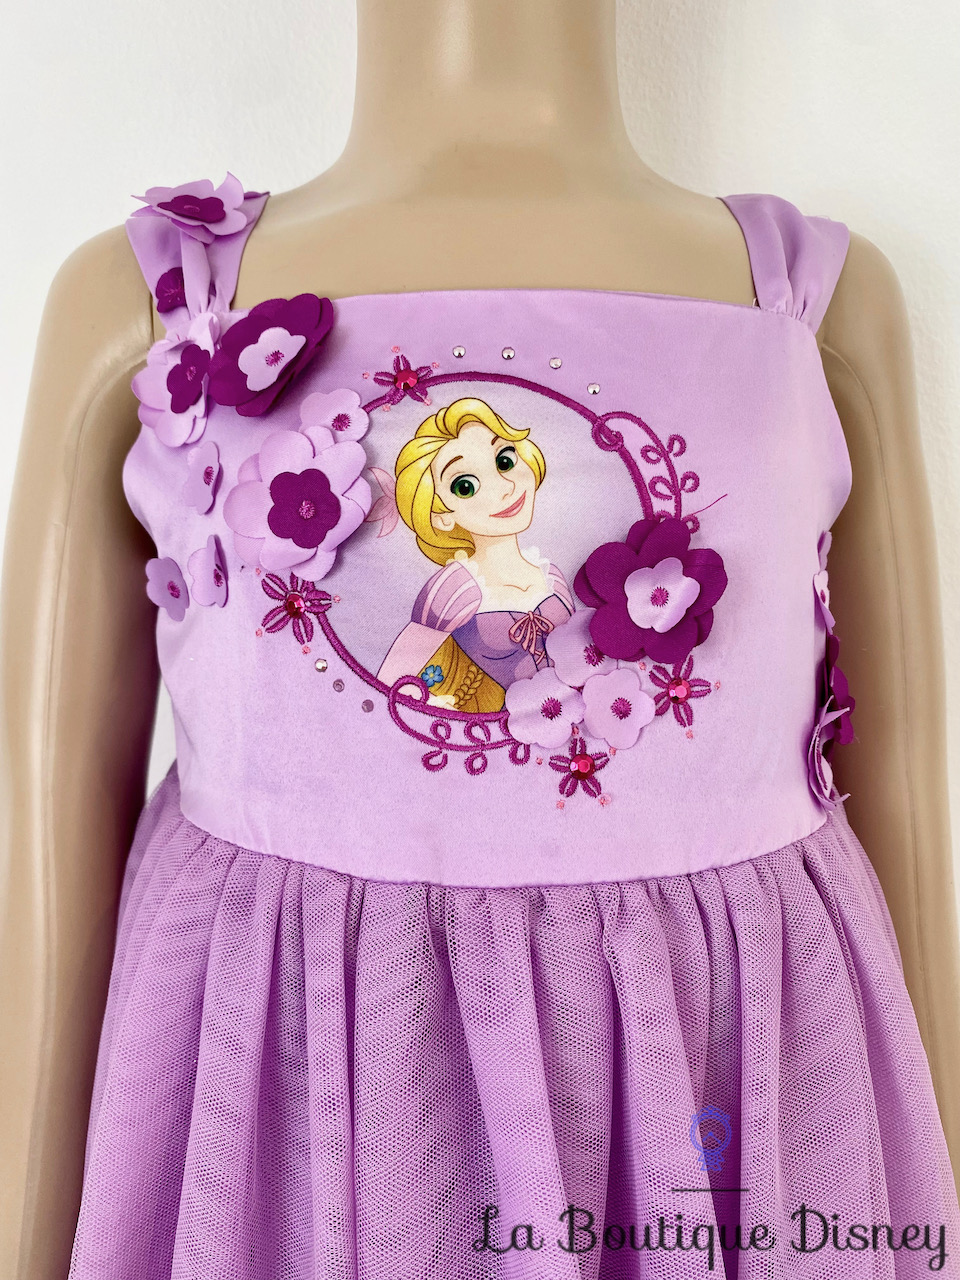 déguisement-raiponce-disney-store-robe-violet-tulle-noeud-fleurs-princesse-7